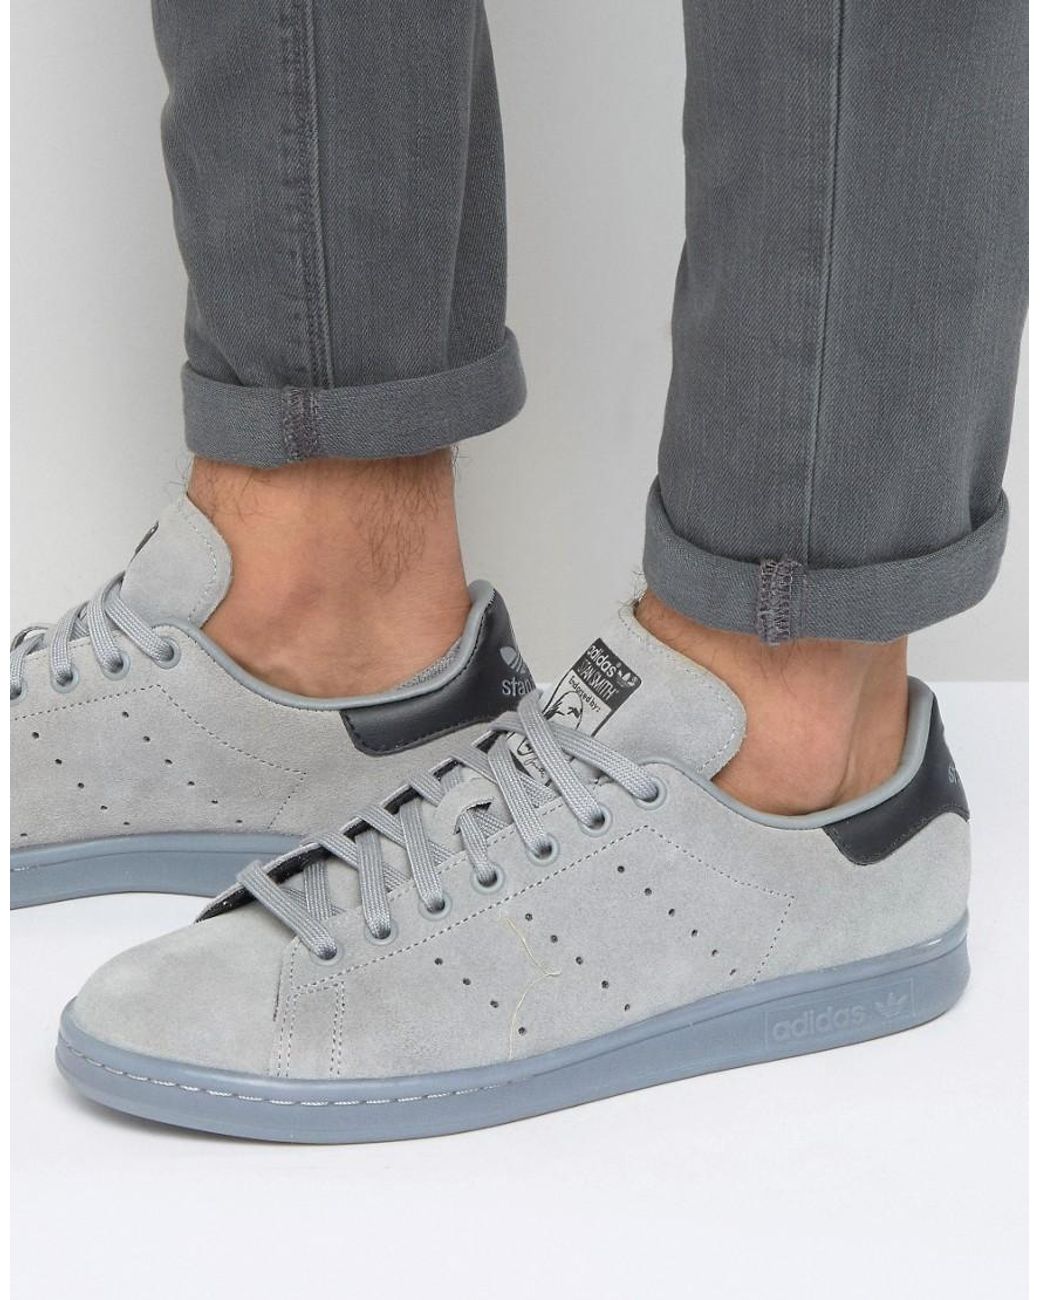 adidas Originals Suede Stan Smith Trainers In Grey S80031 - Grey in Gray  for Men | Lyst